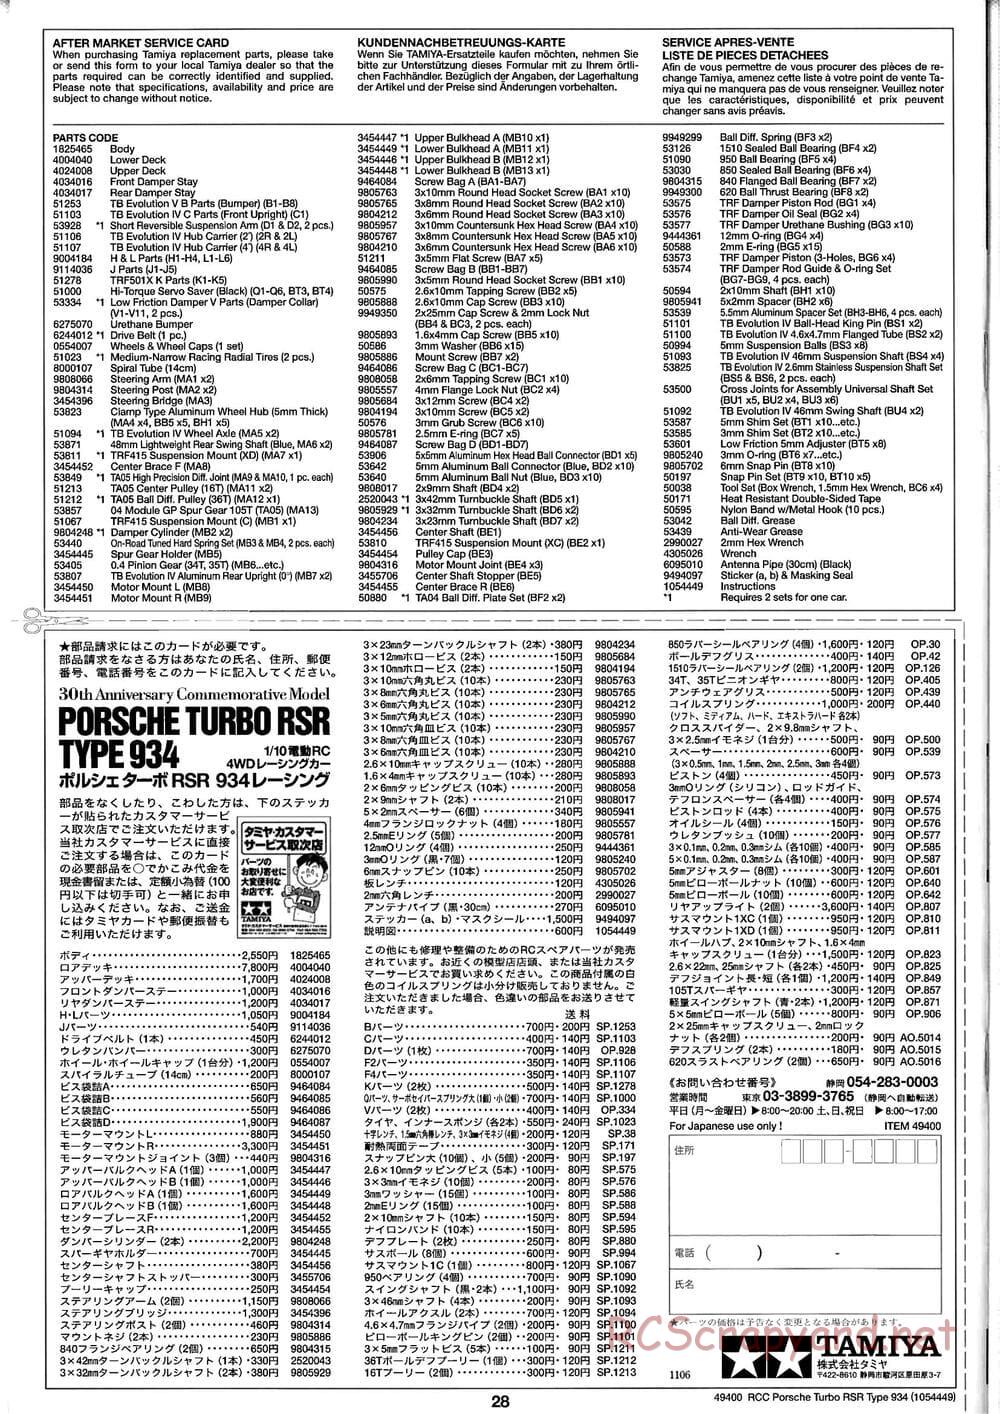 Tamiya - Porsche Turbo RSR Type 934 - TA05 Chassis - Manual - Page 28